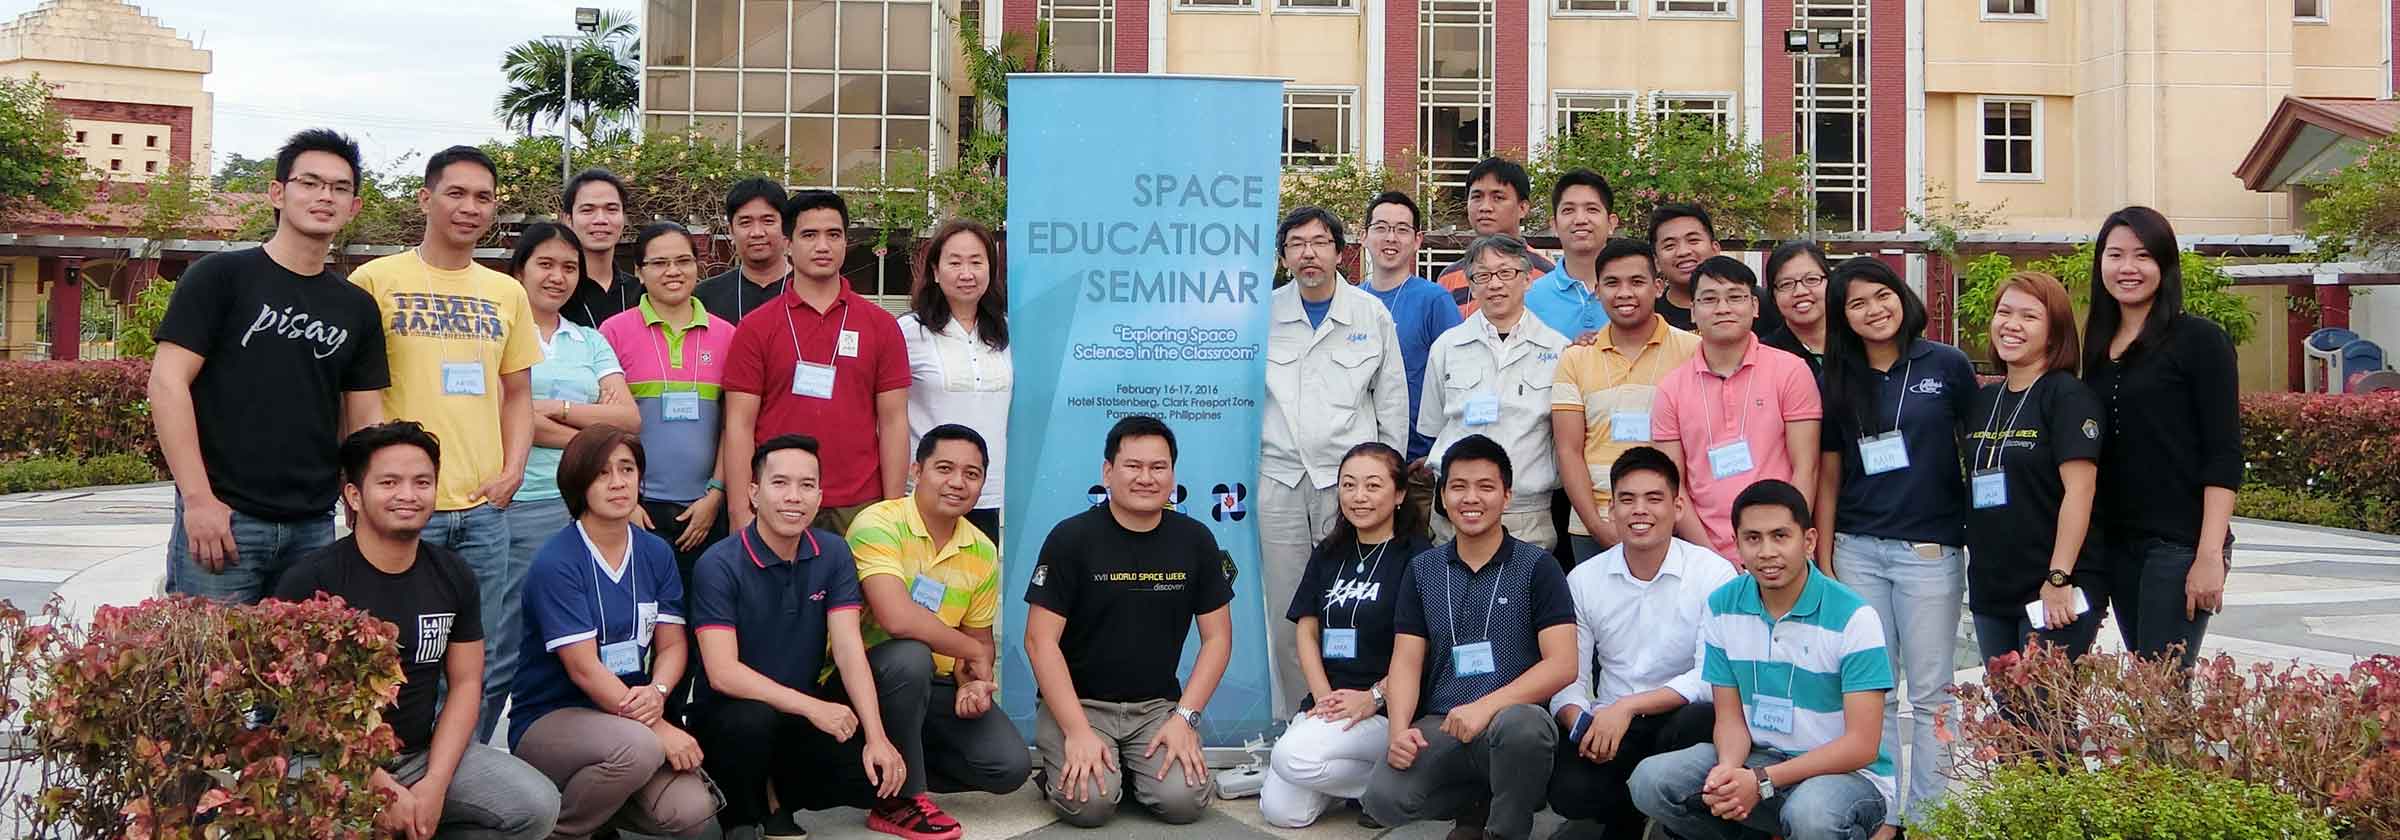 APRSAF Space Education Seminar